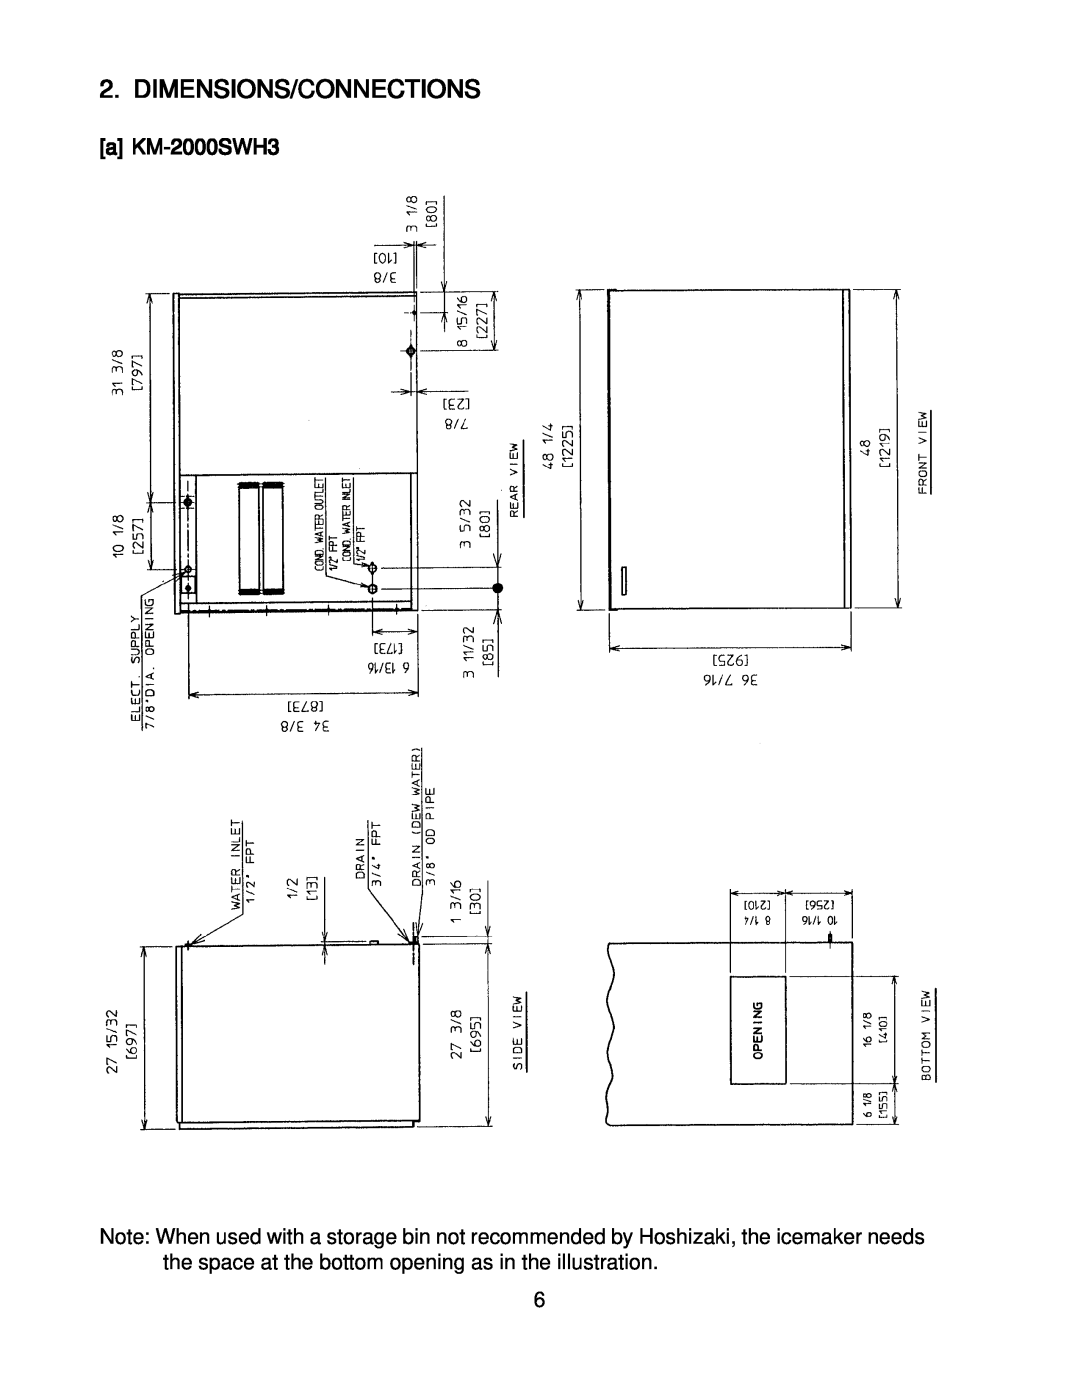 Hoshizaki KM-2000SRH3 instruction manual Dimensions/Connections, aKM-2000SWH3 